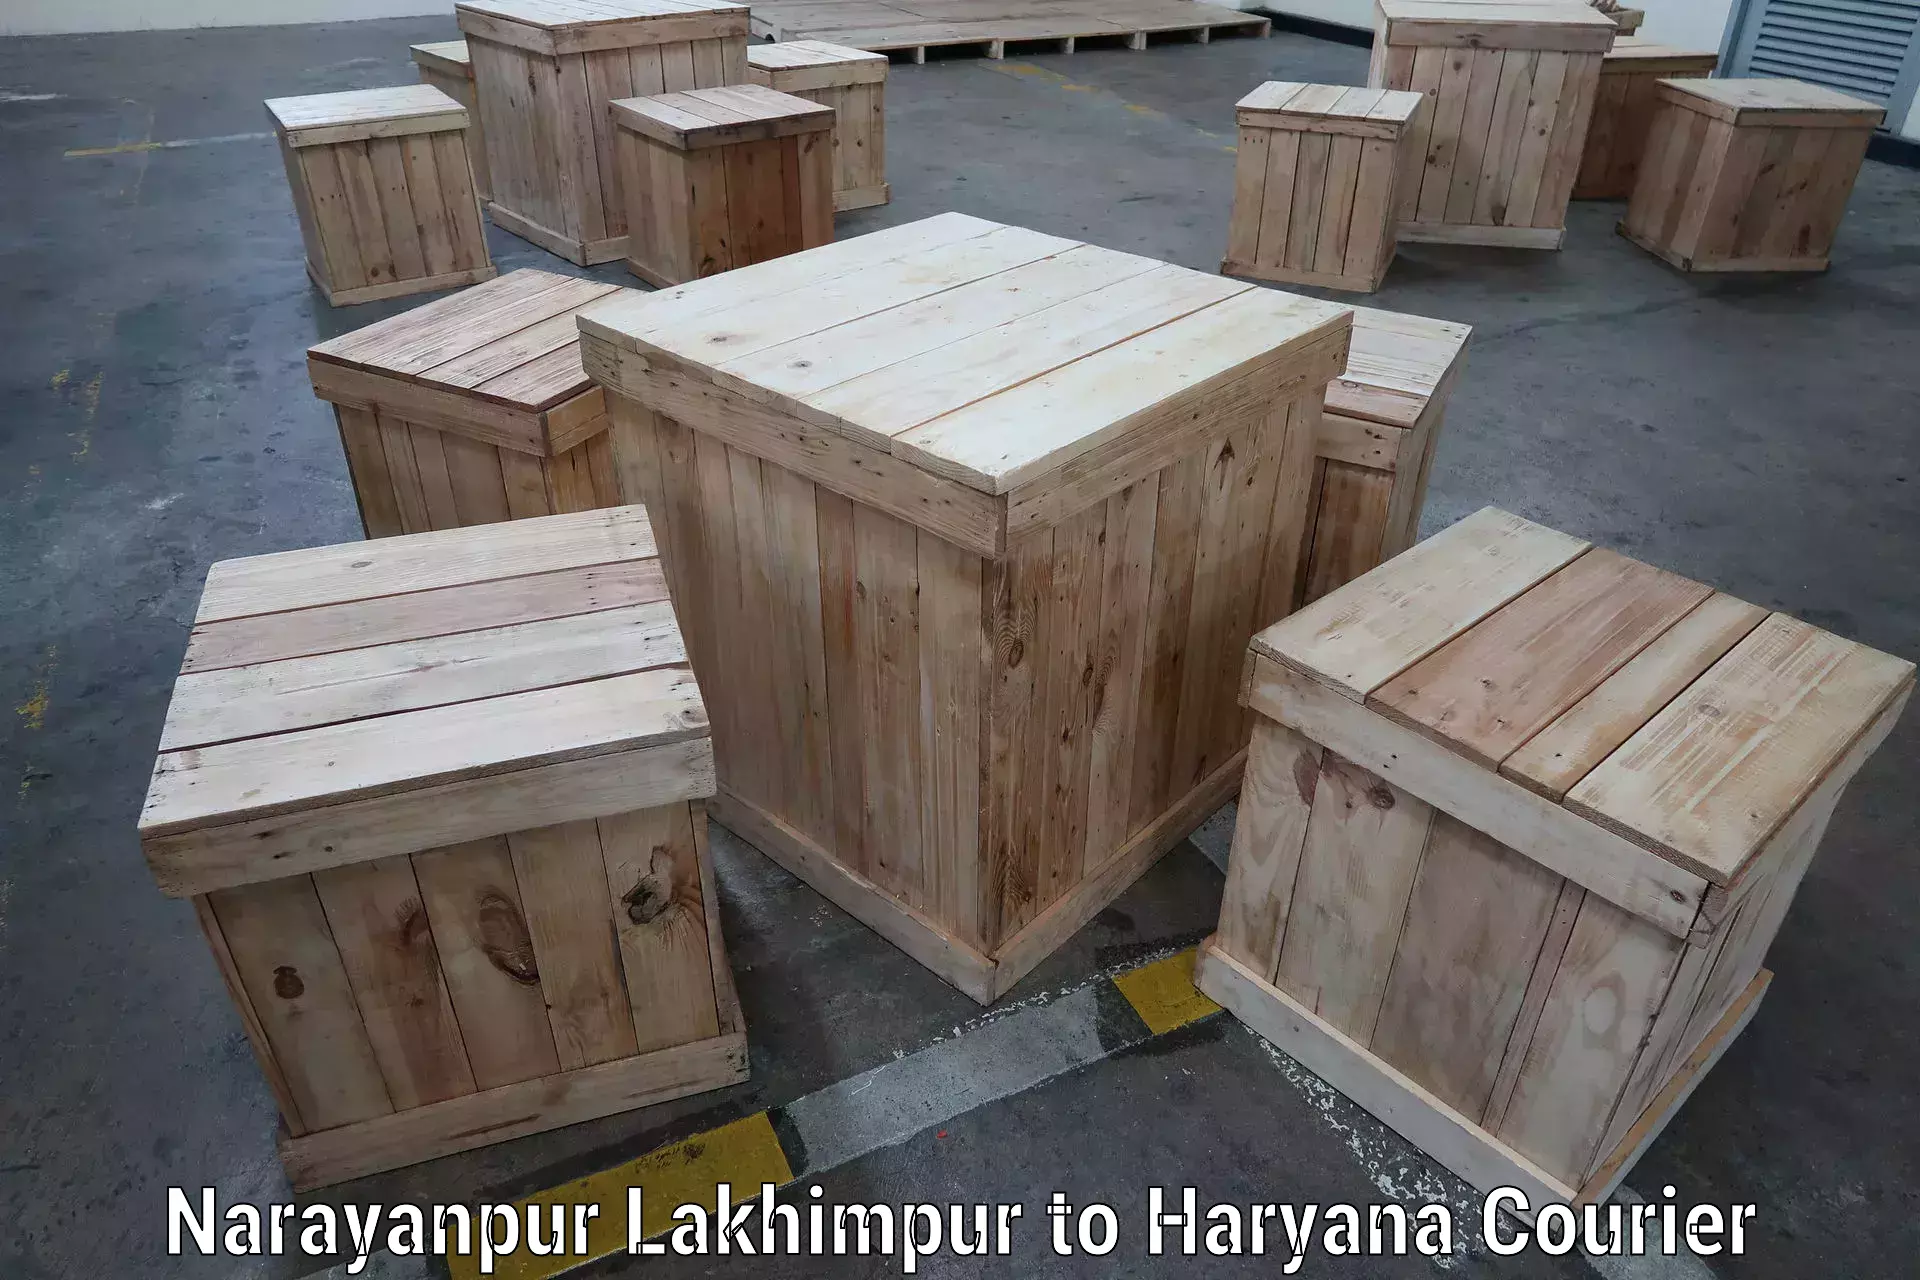 Delivery service partnership Narayanpur Lakhimpur to Haryana